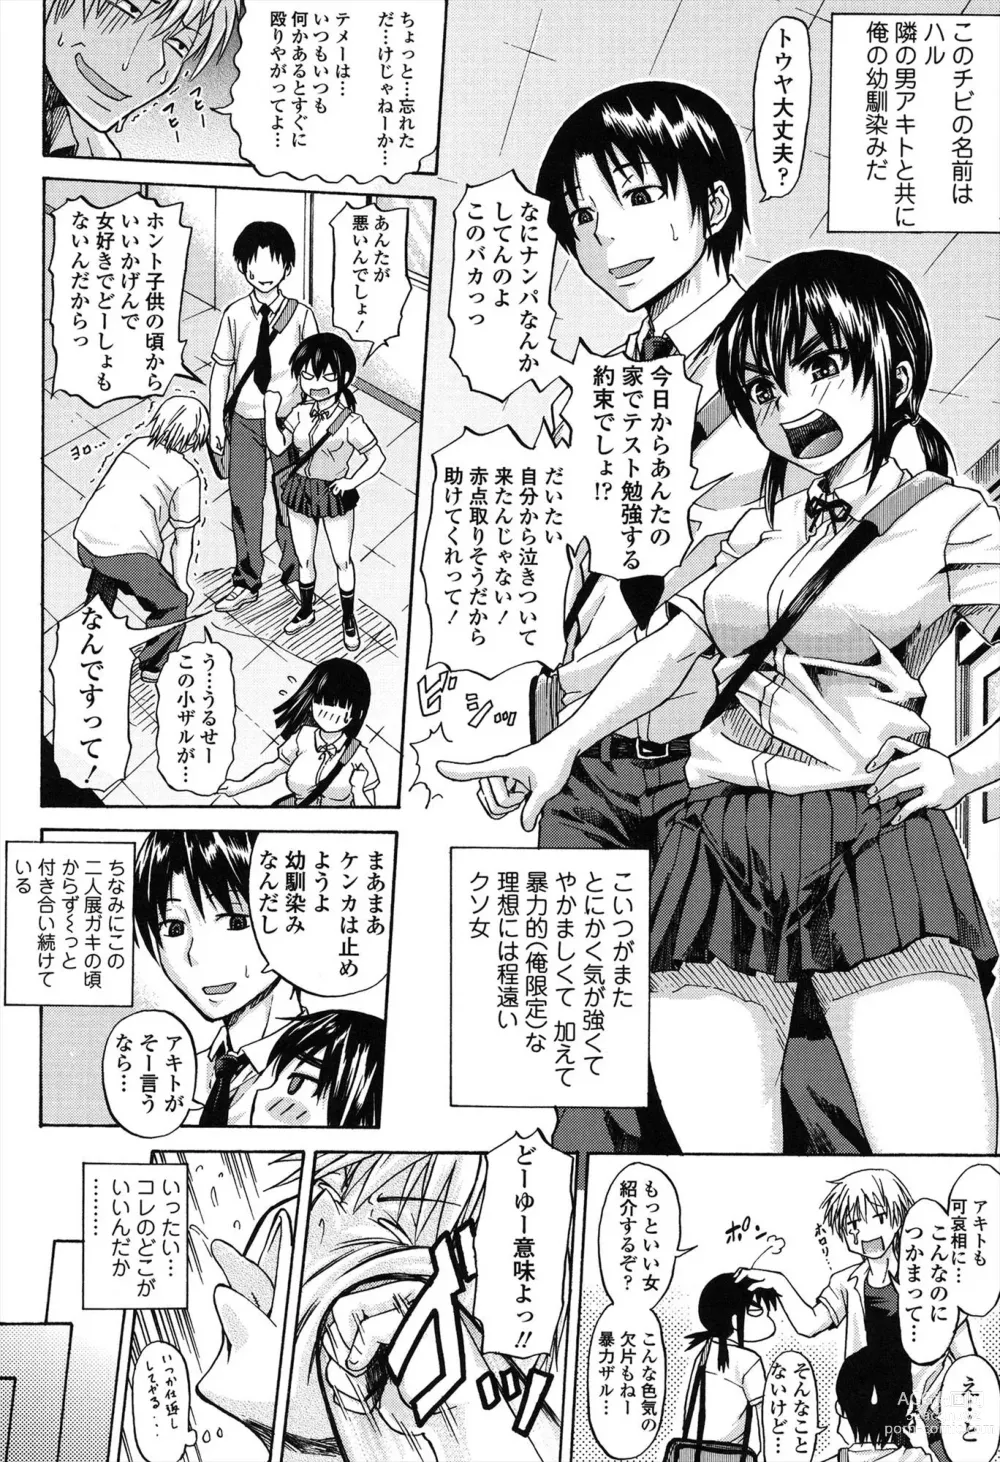 Page 4 of manga Repeat Libido